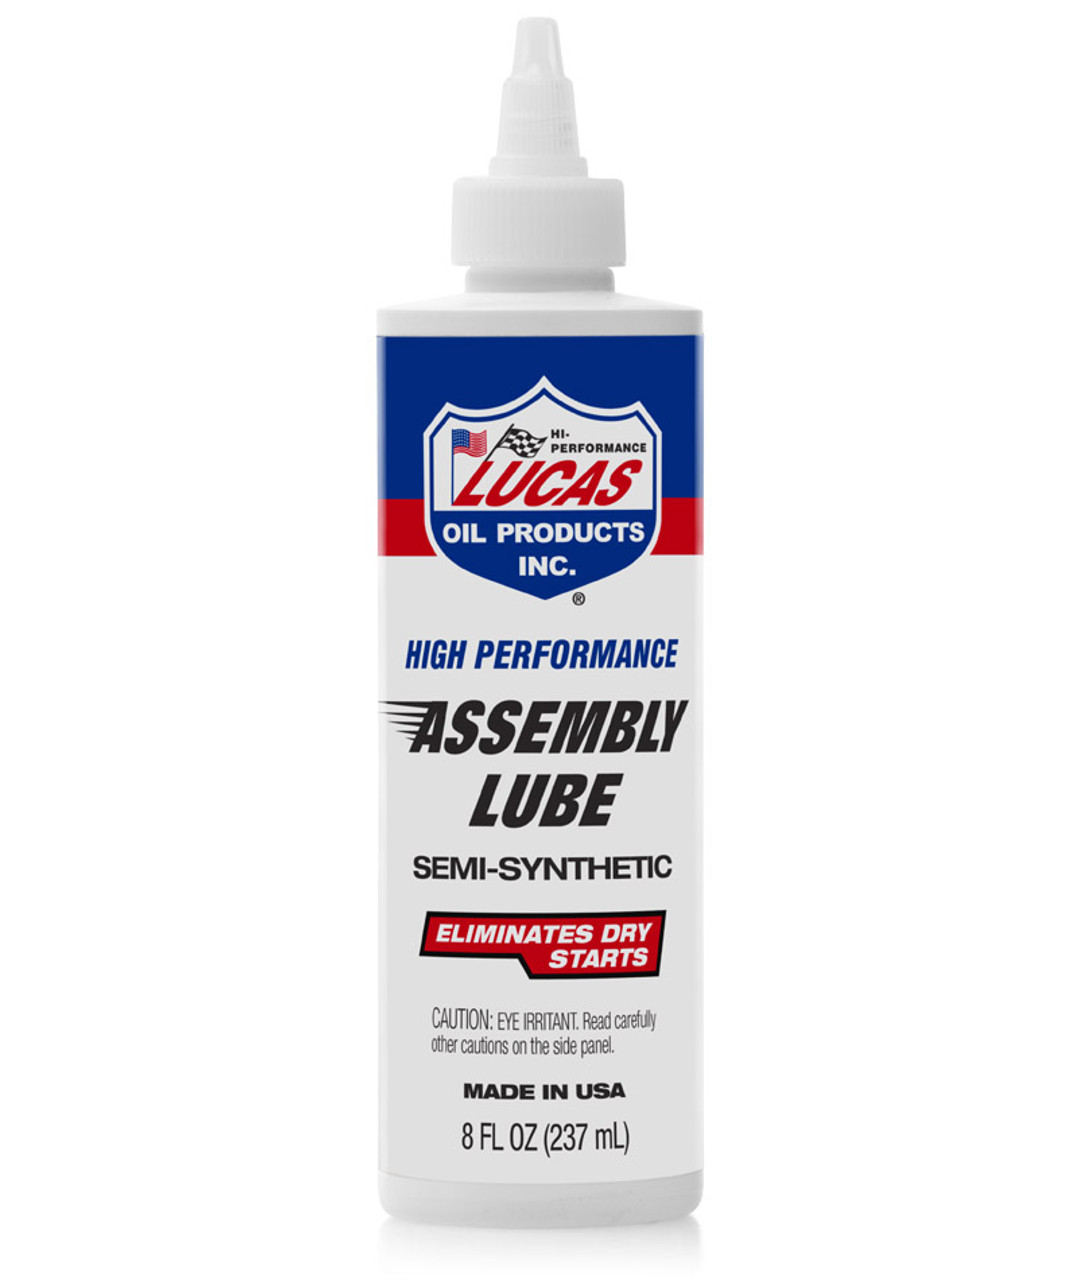 Lucas Oil 6.4L Powerstroke Assembly Lube